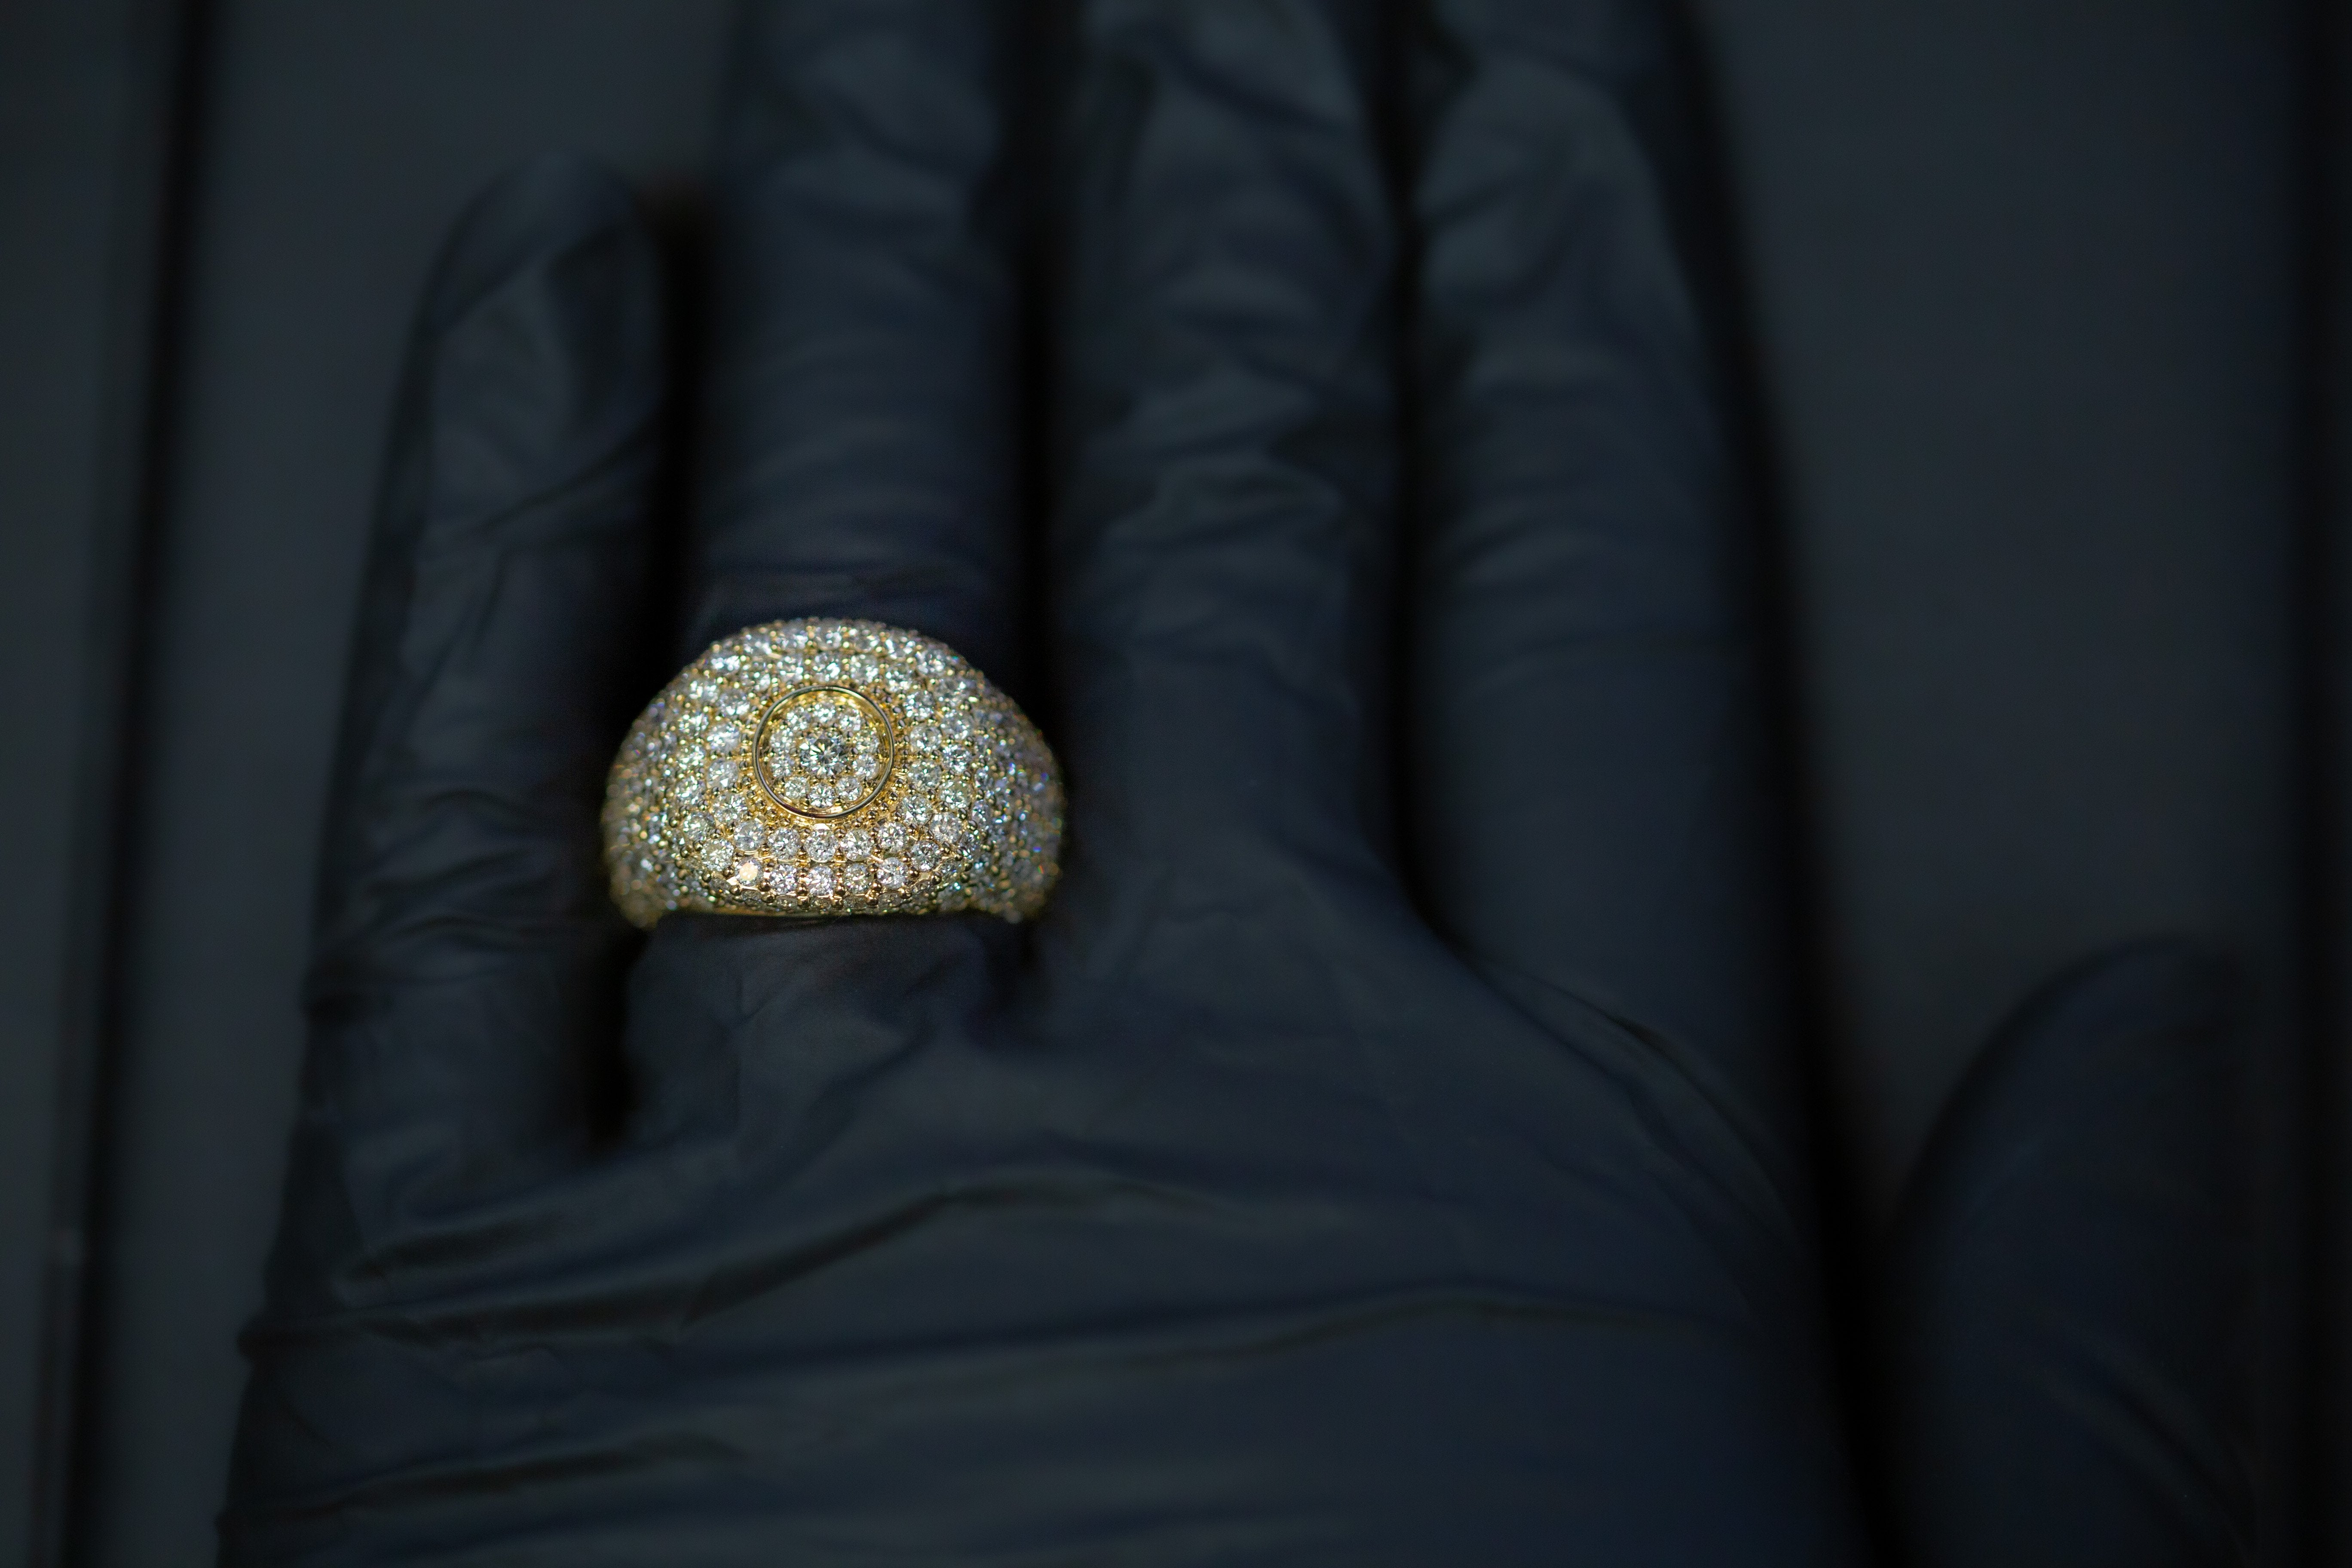 6.00 CT. Diamond Ring in 10K Gold - White Carat Diamonds 